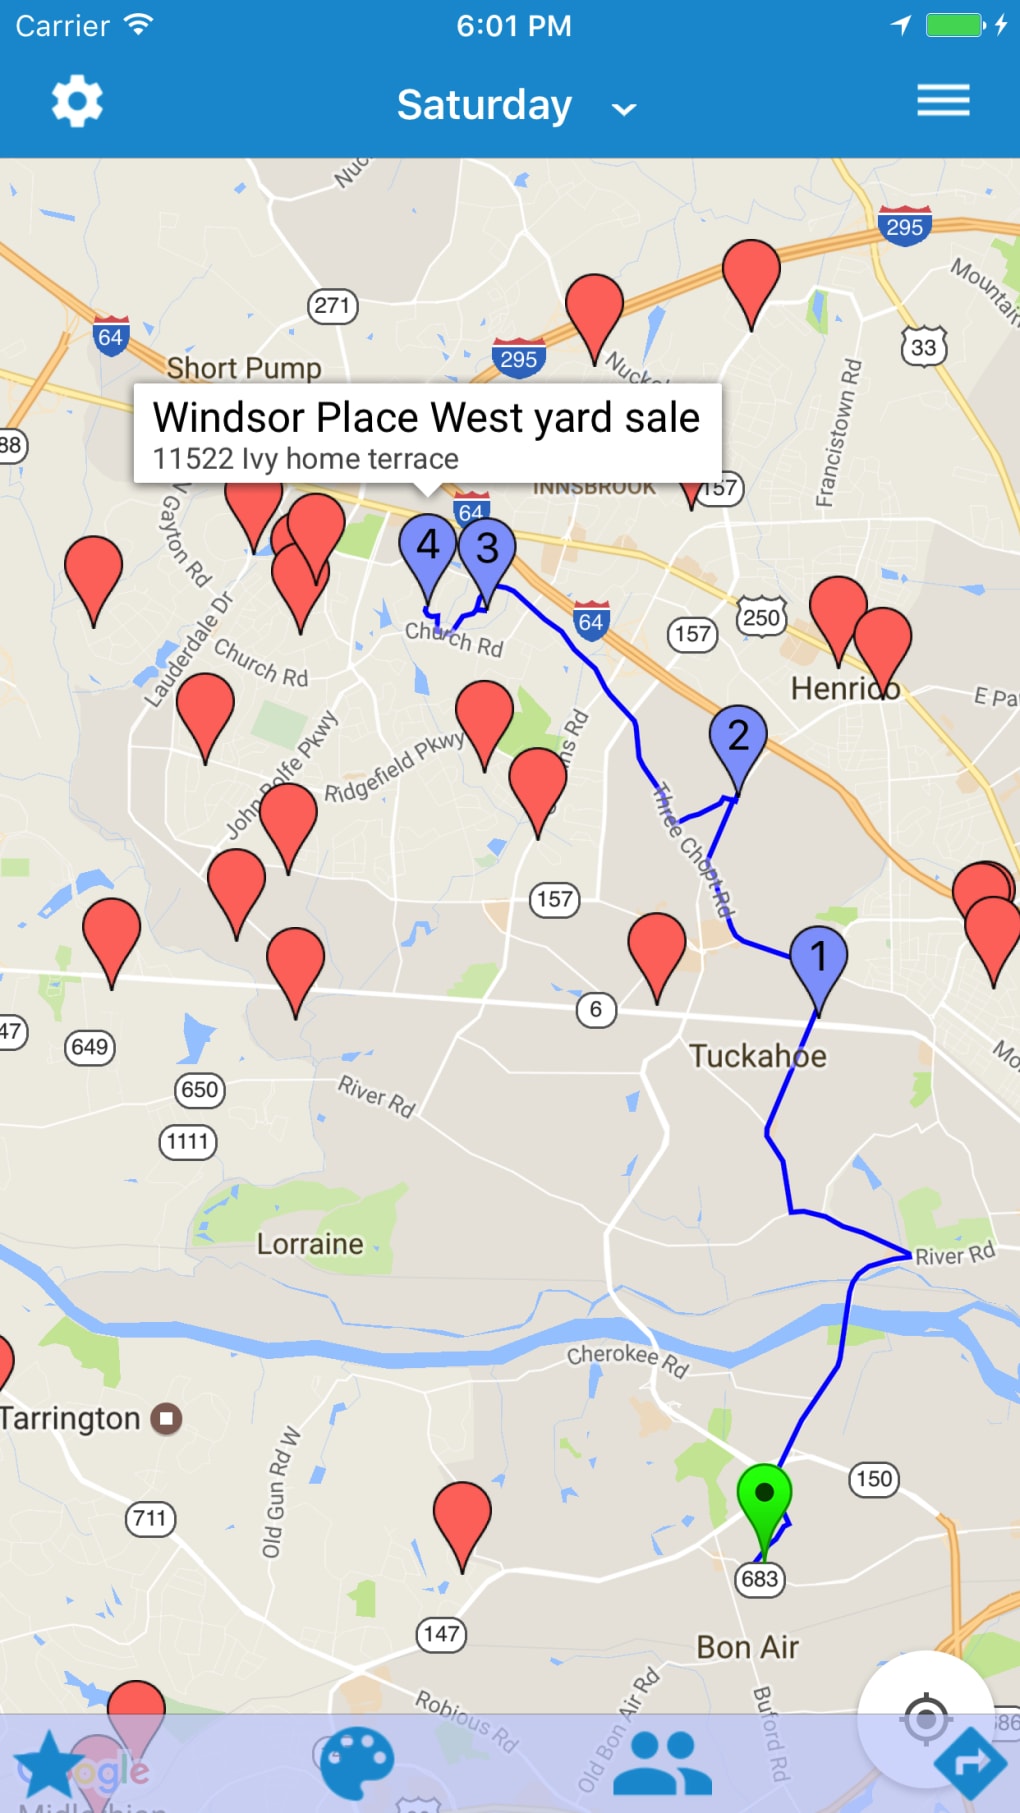 Yard Sale Treasure Map App 